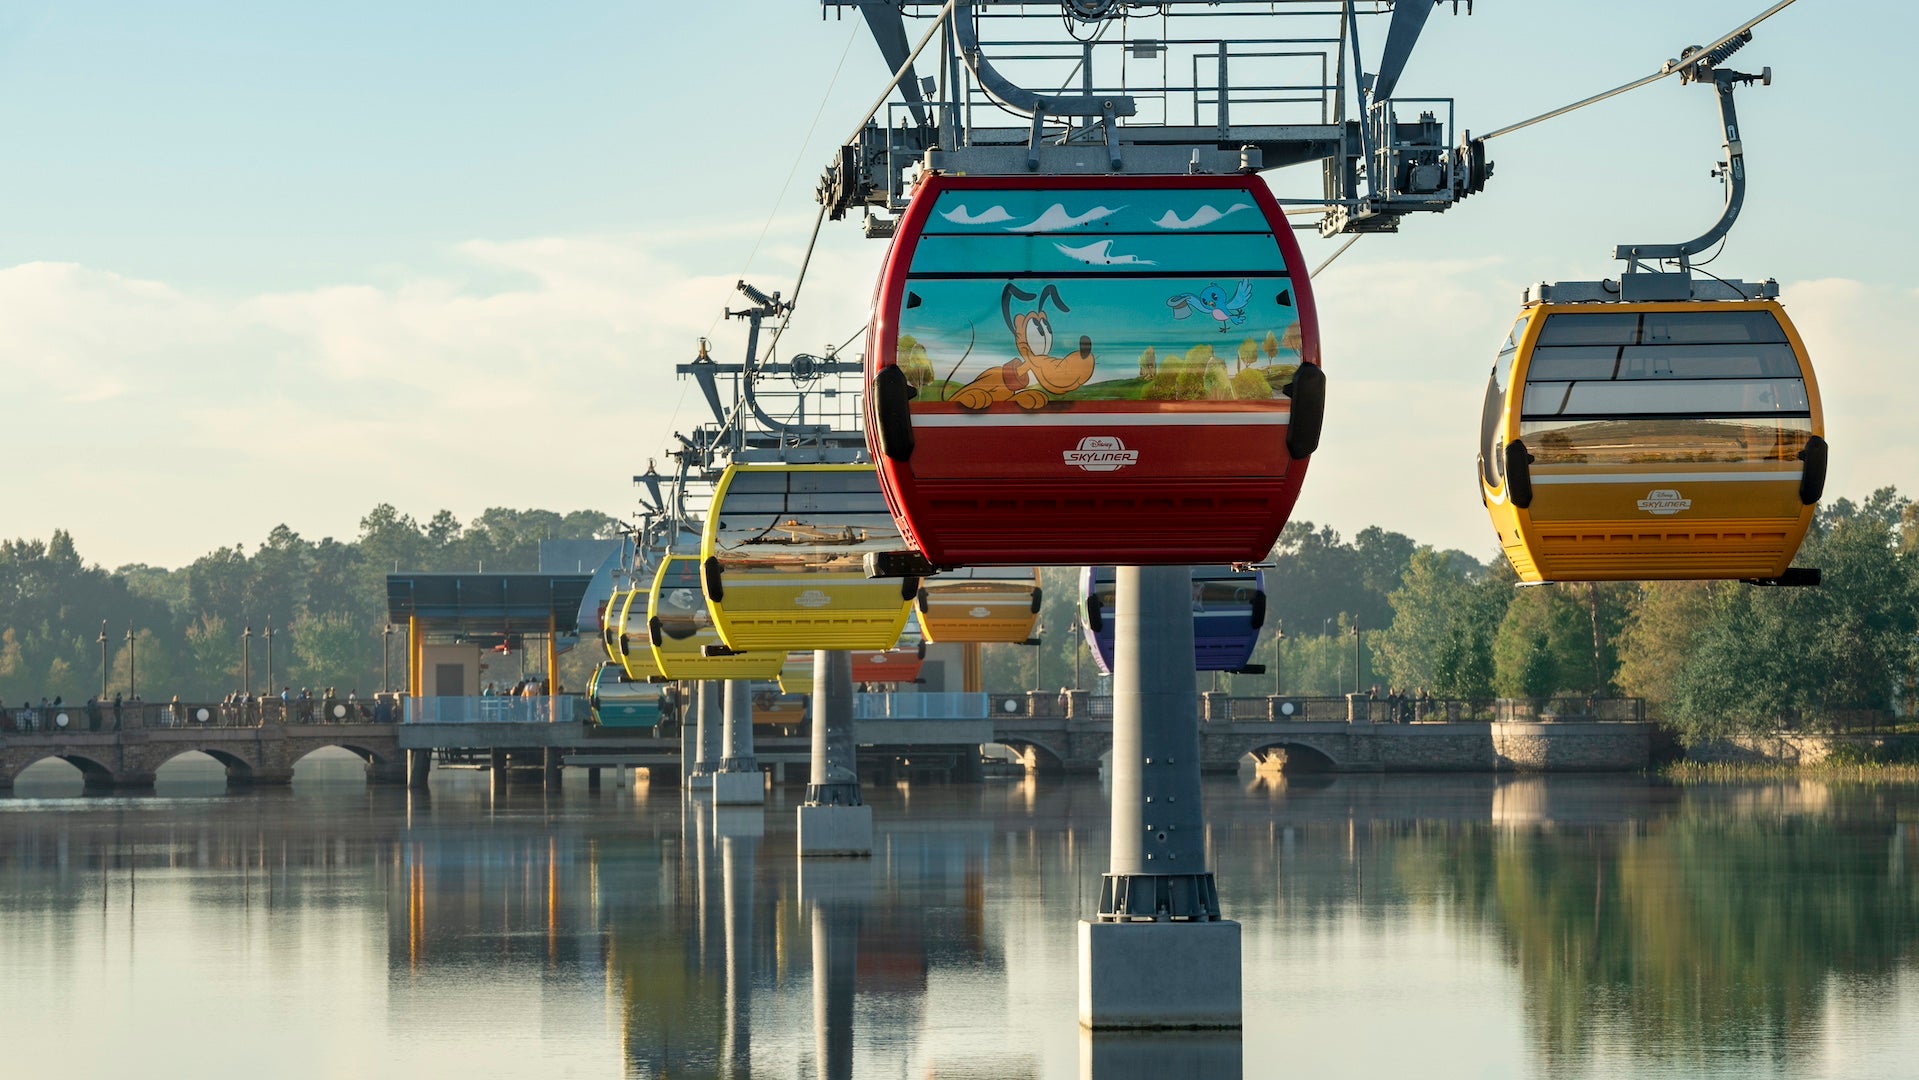 Disney themed gondolas above a lake